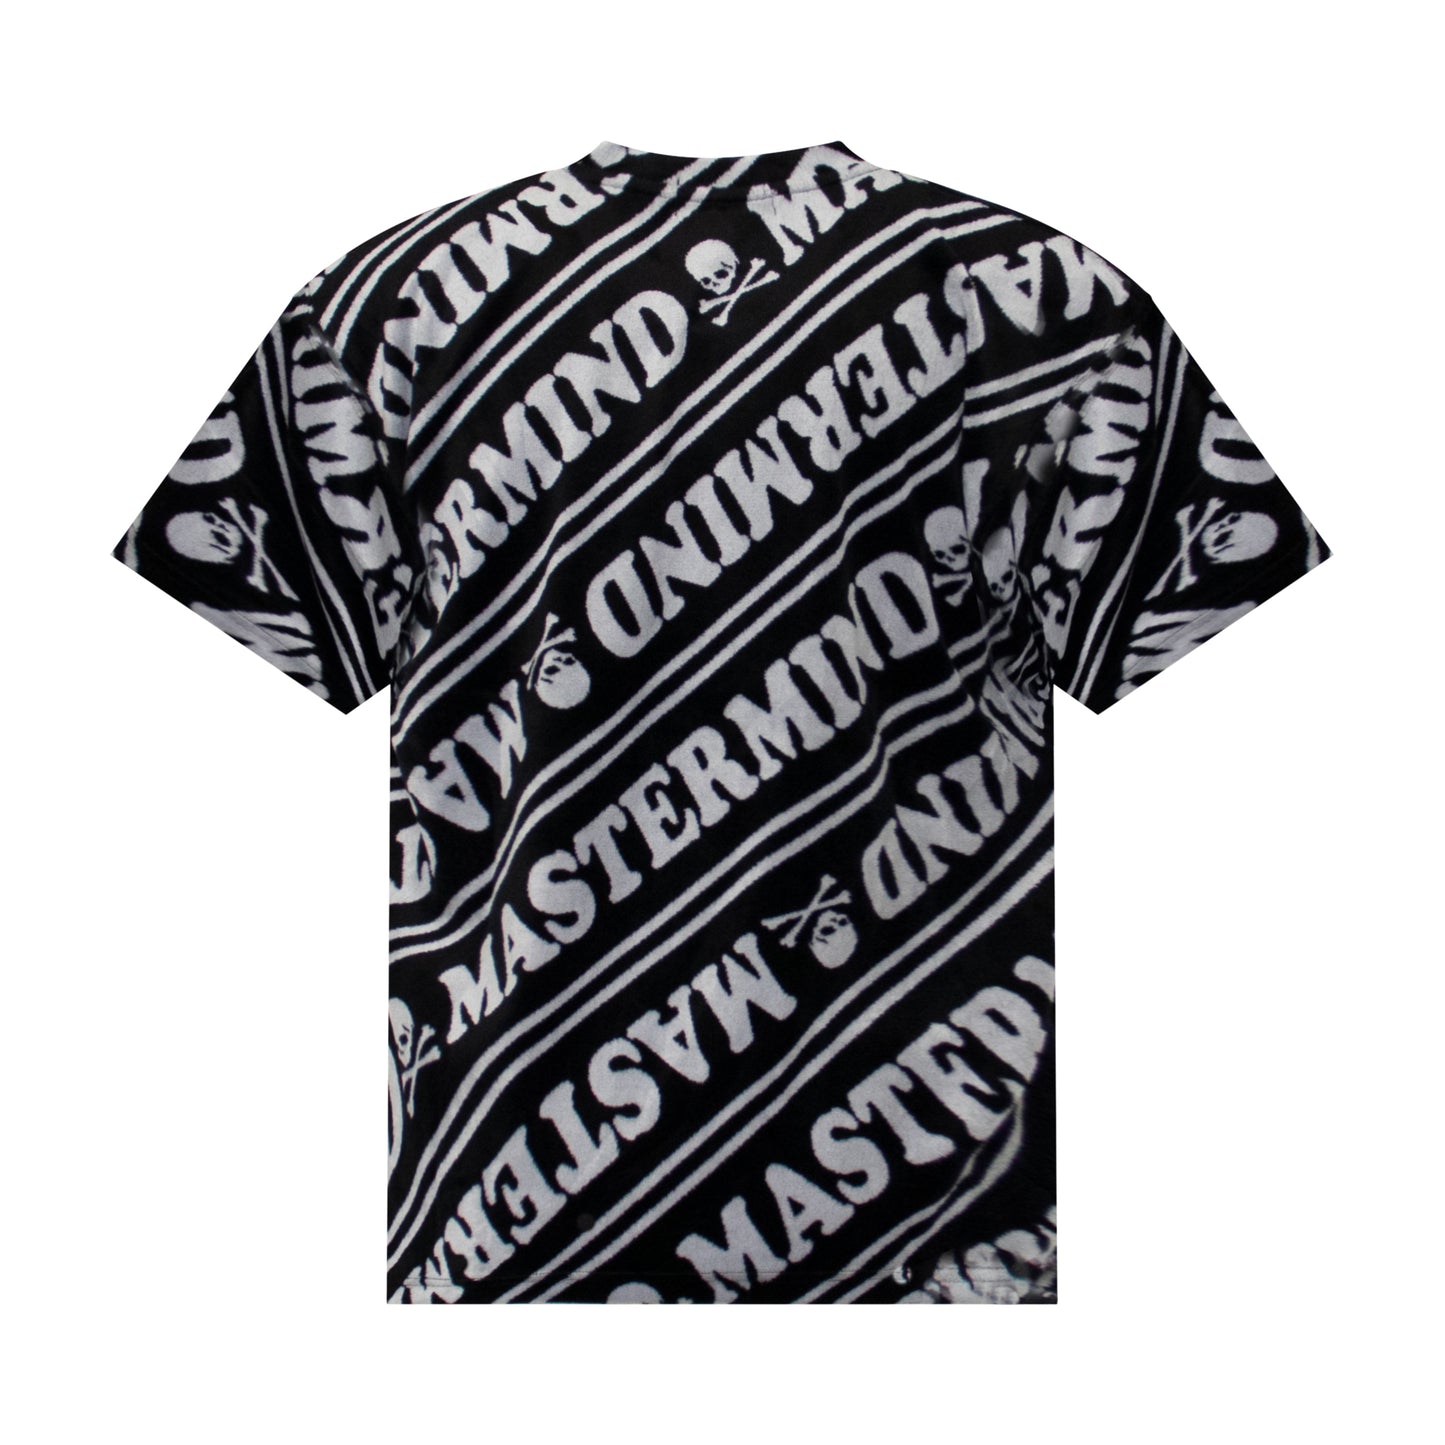 Mastermind Japan T-Shirt in Black/White